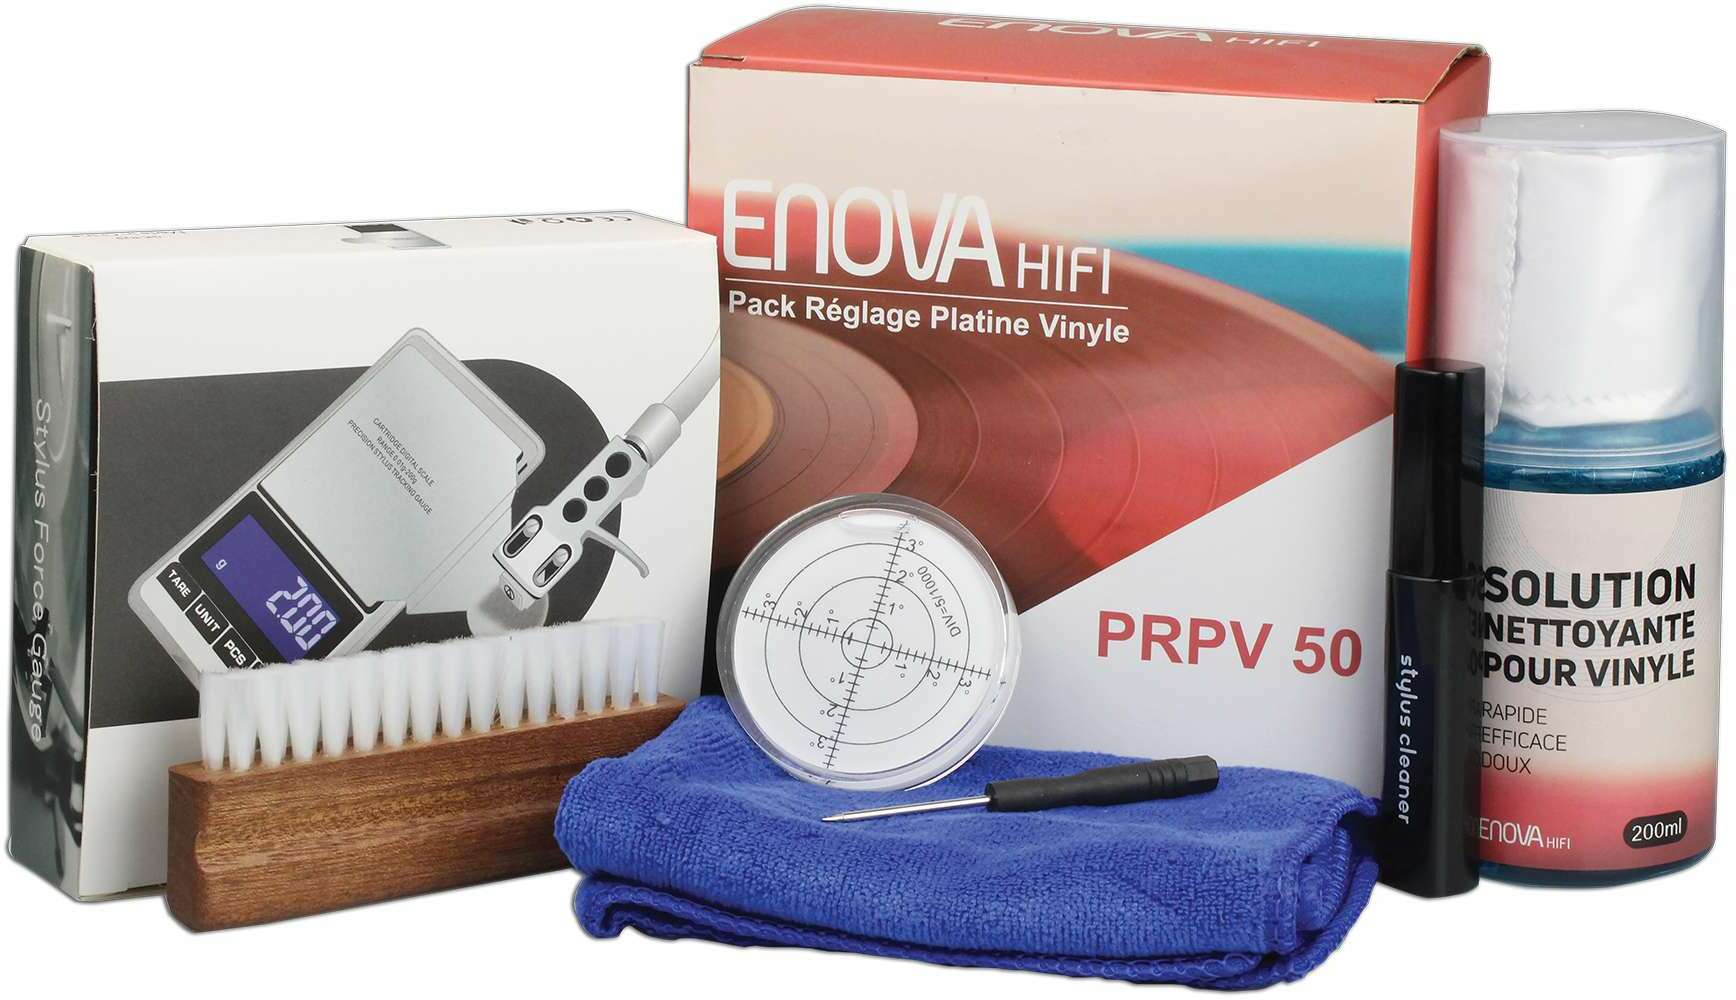 Enova Hifi Pack Reglage Platine Vinyle - Prpv 50 - Reiniging set - Main picture